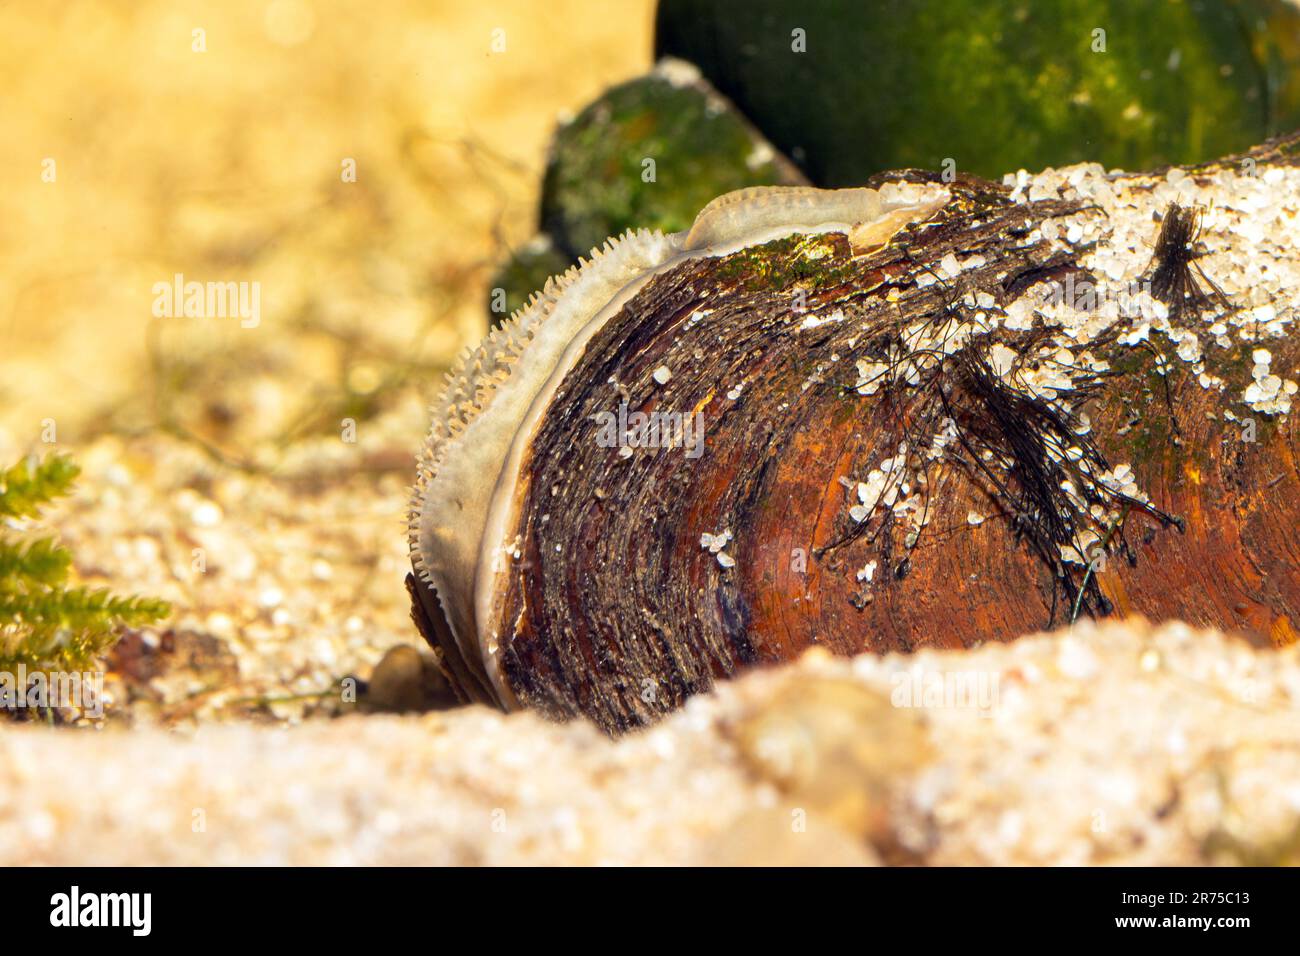 painter's mussel (Unio pictorum, Pollicepes pictorum), under water, Germany Stock Photo